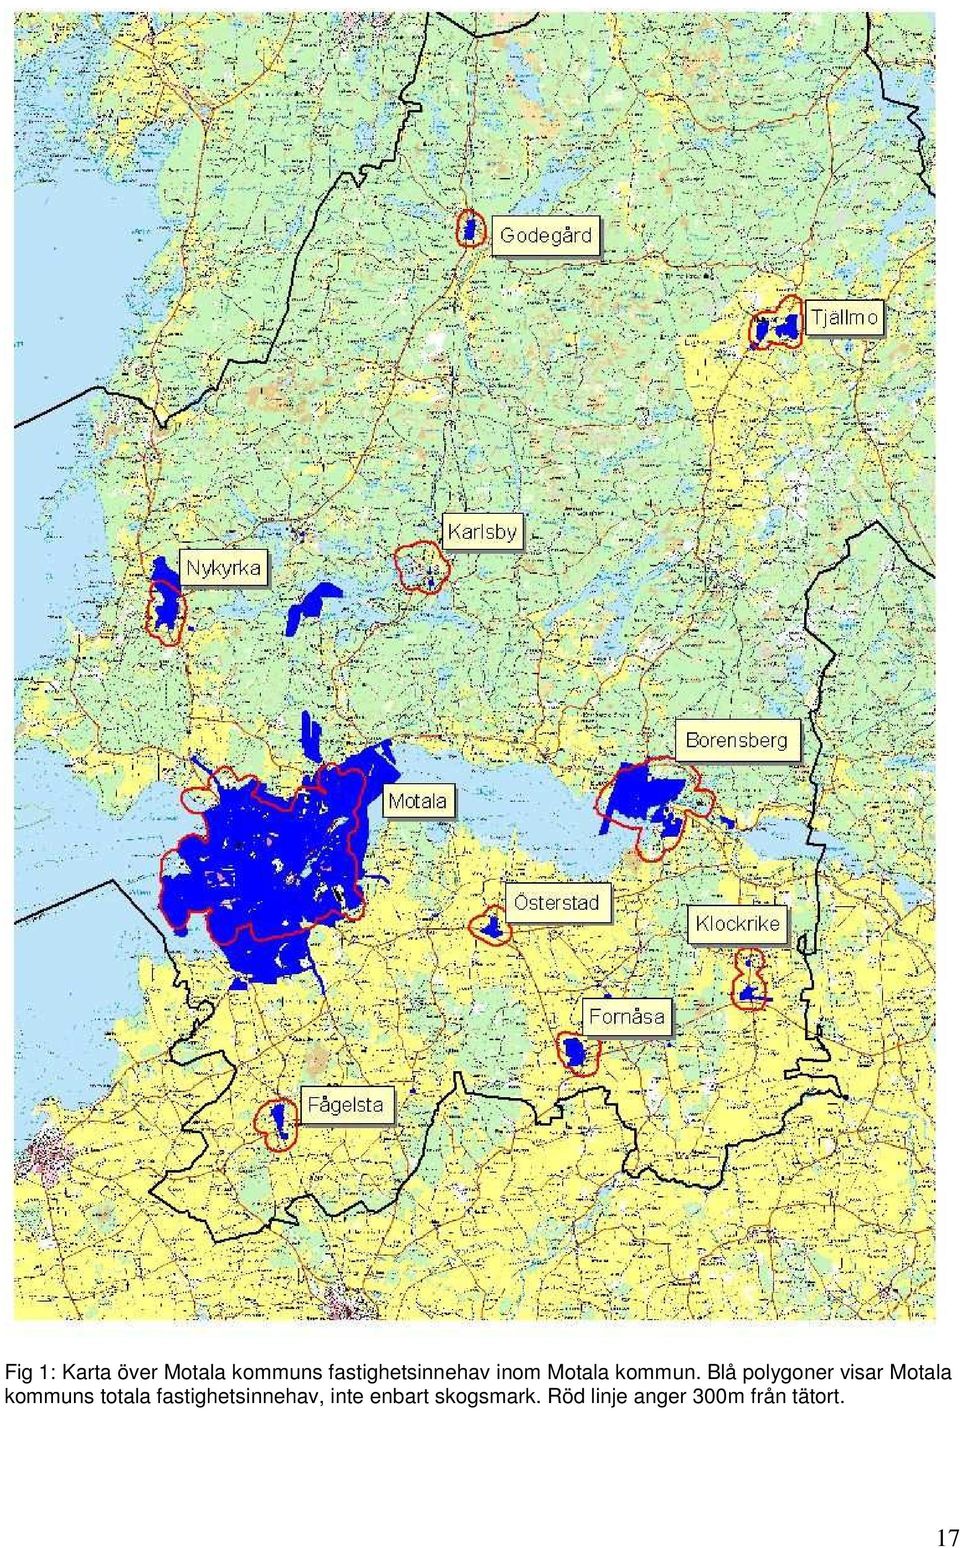 Blå polygoner visar Motala kommuns totala